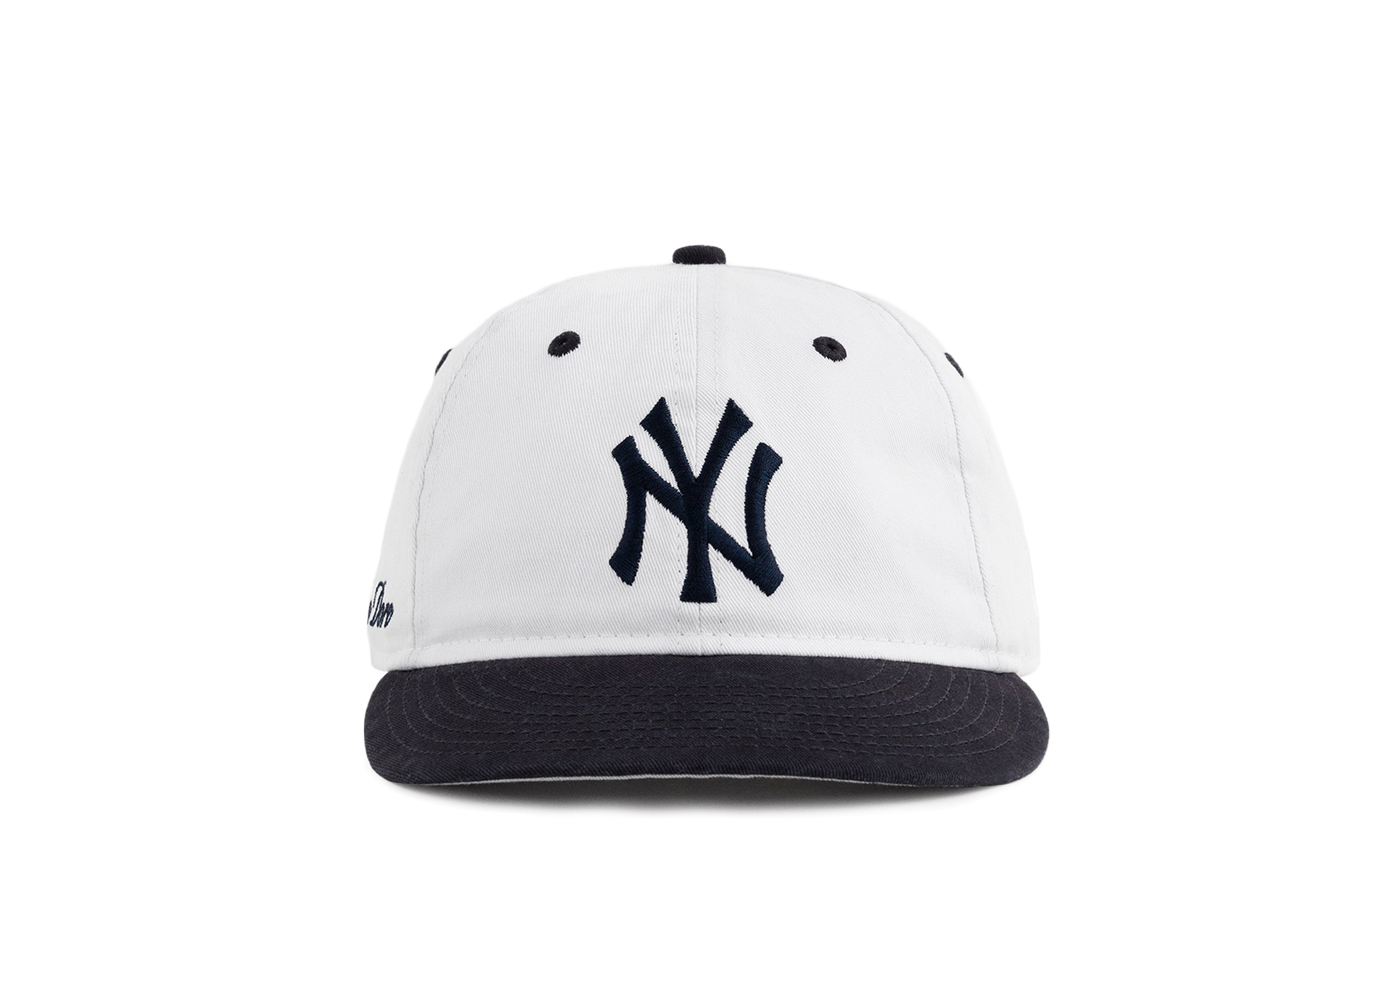 Aime Leon Dore x New Era Washed Chino Yankees (2021) Hat White